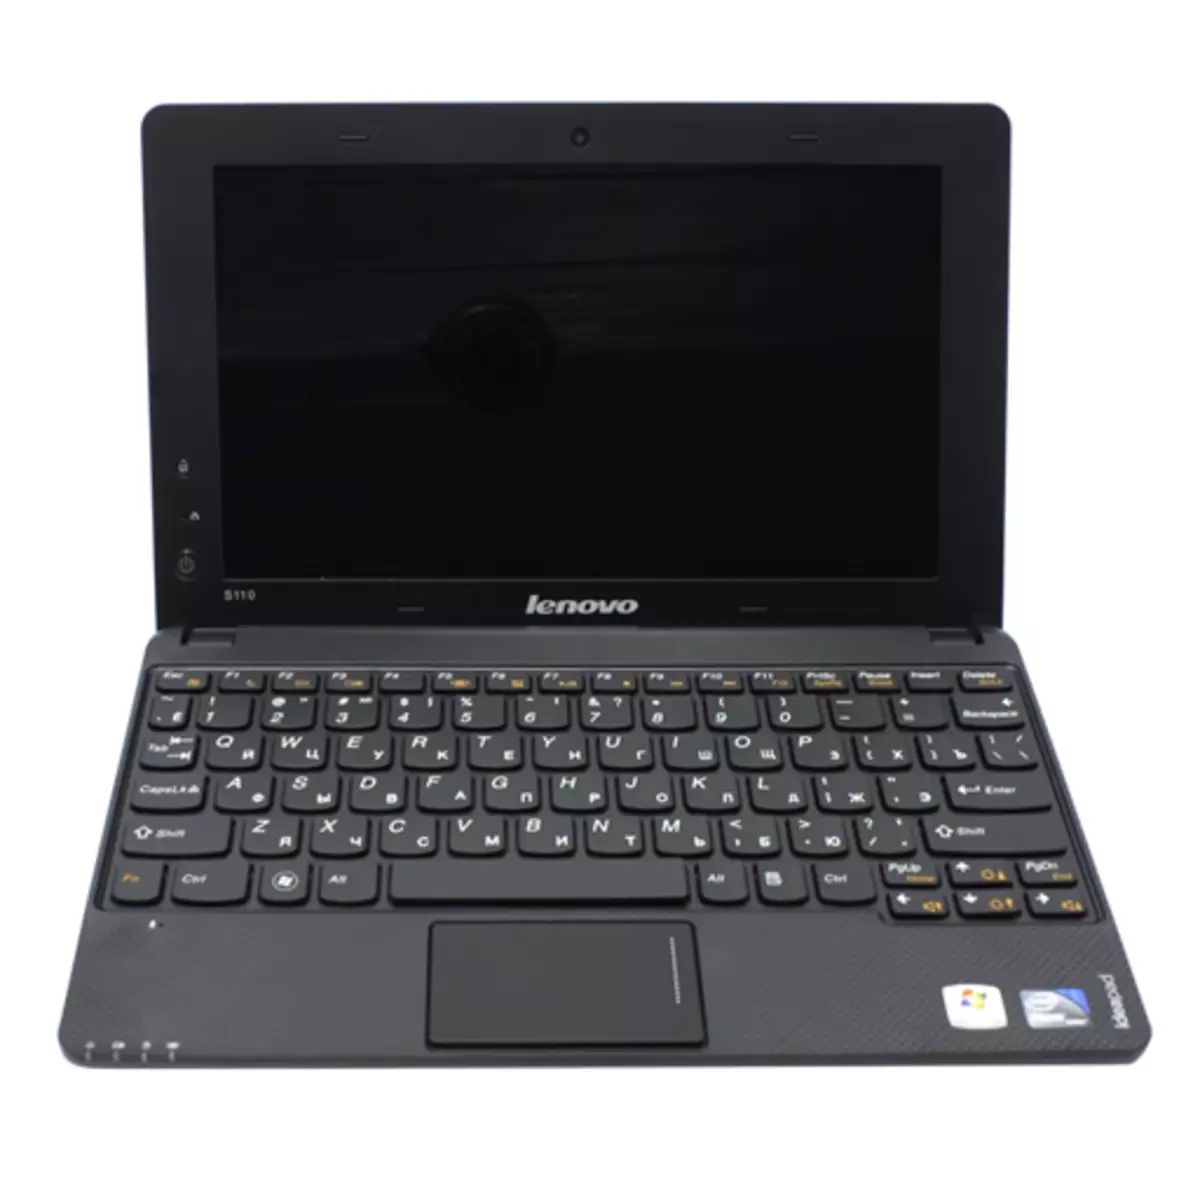 Download Darawalada Lenovo S110